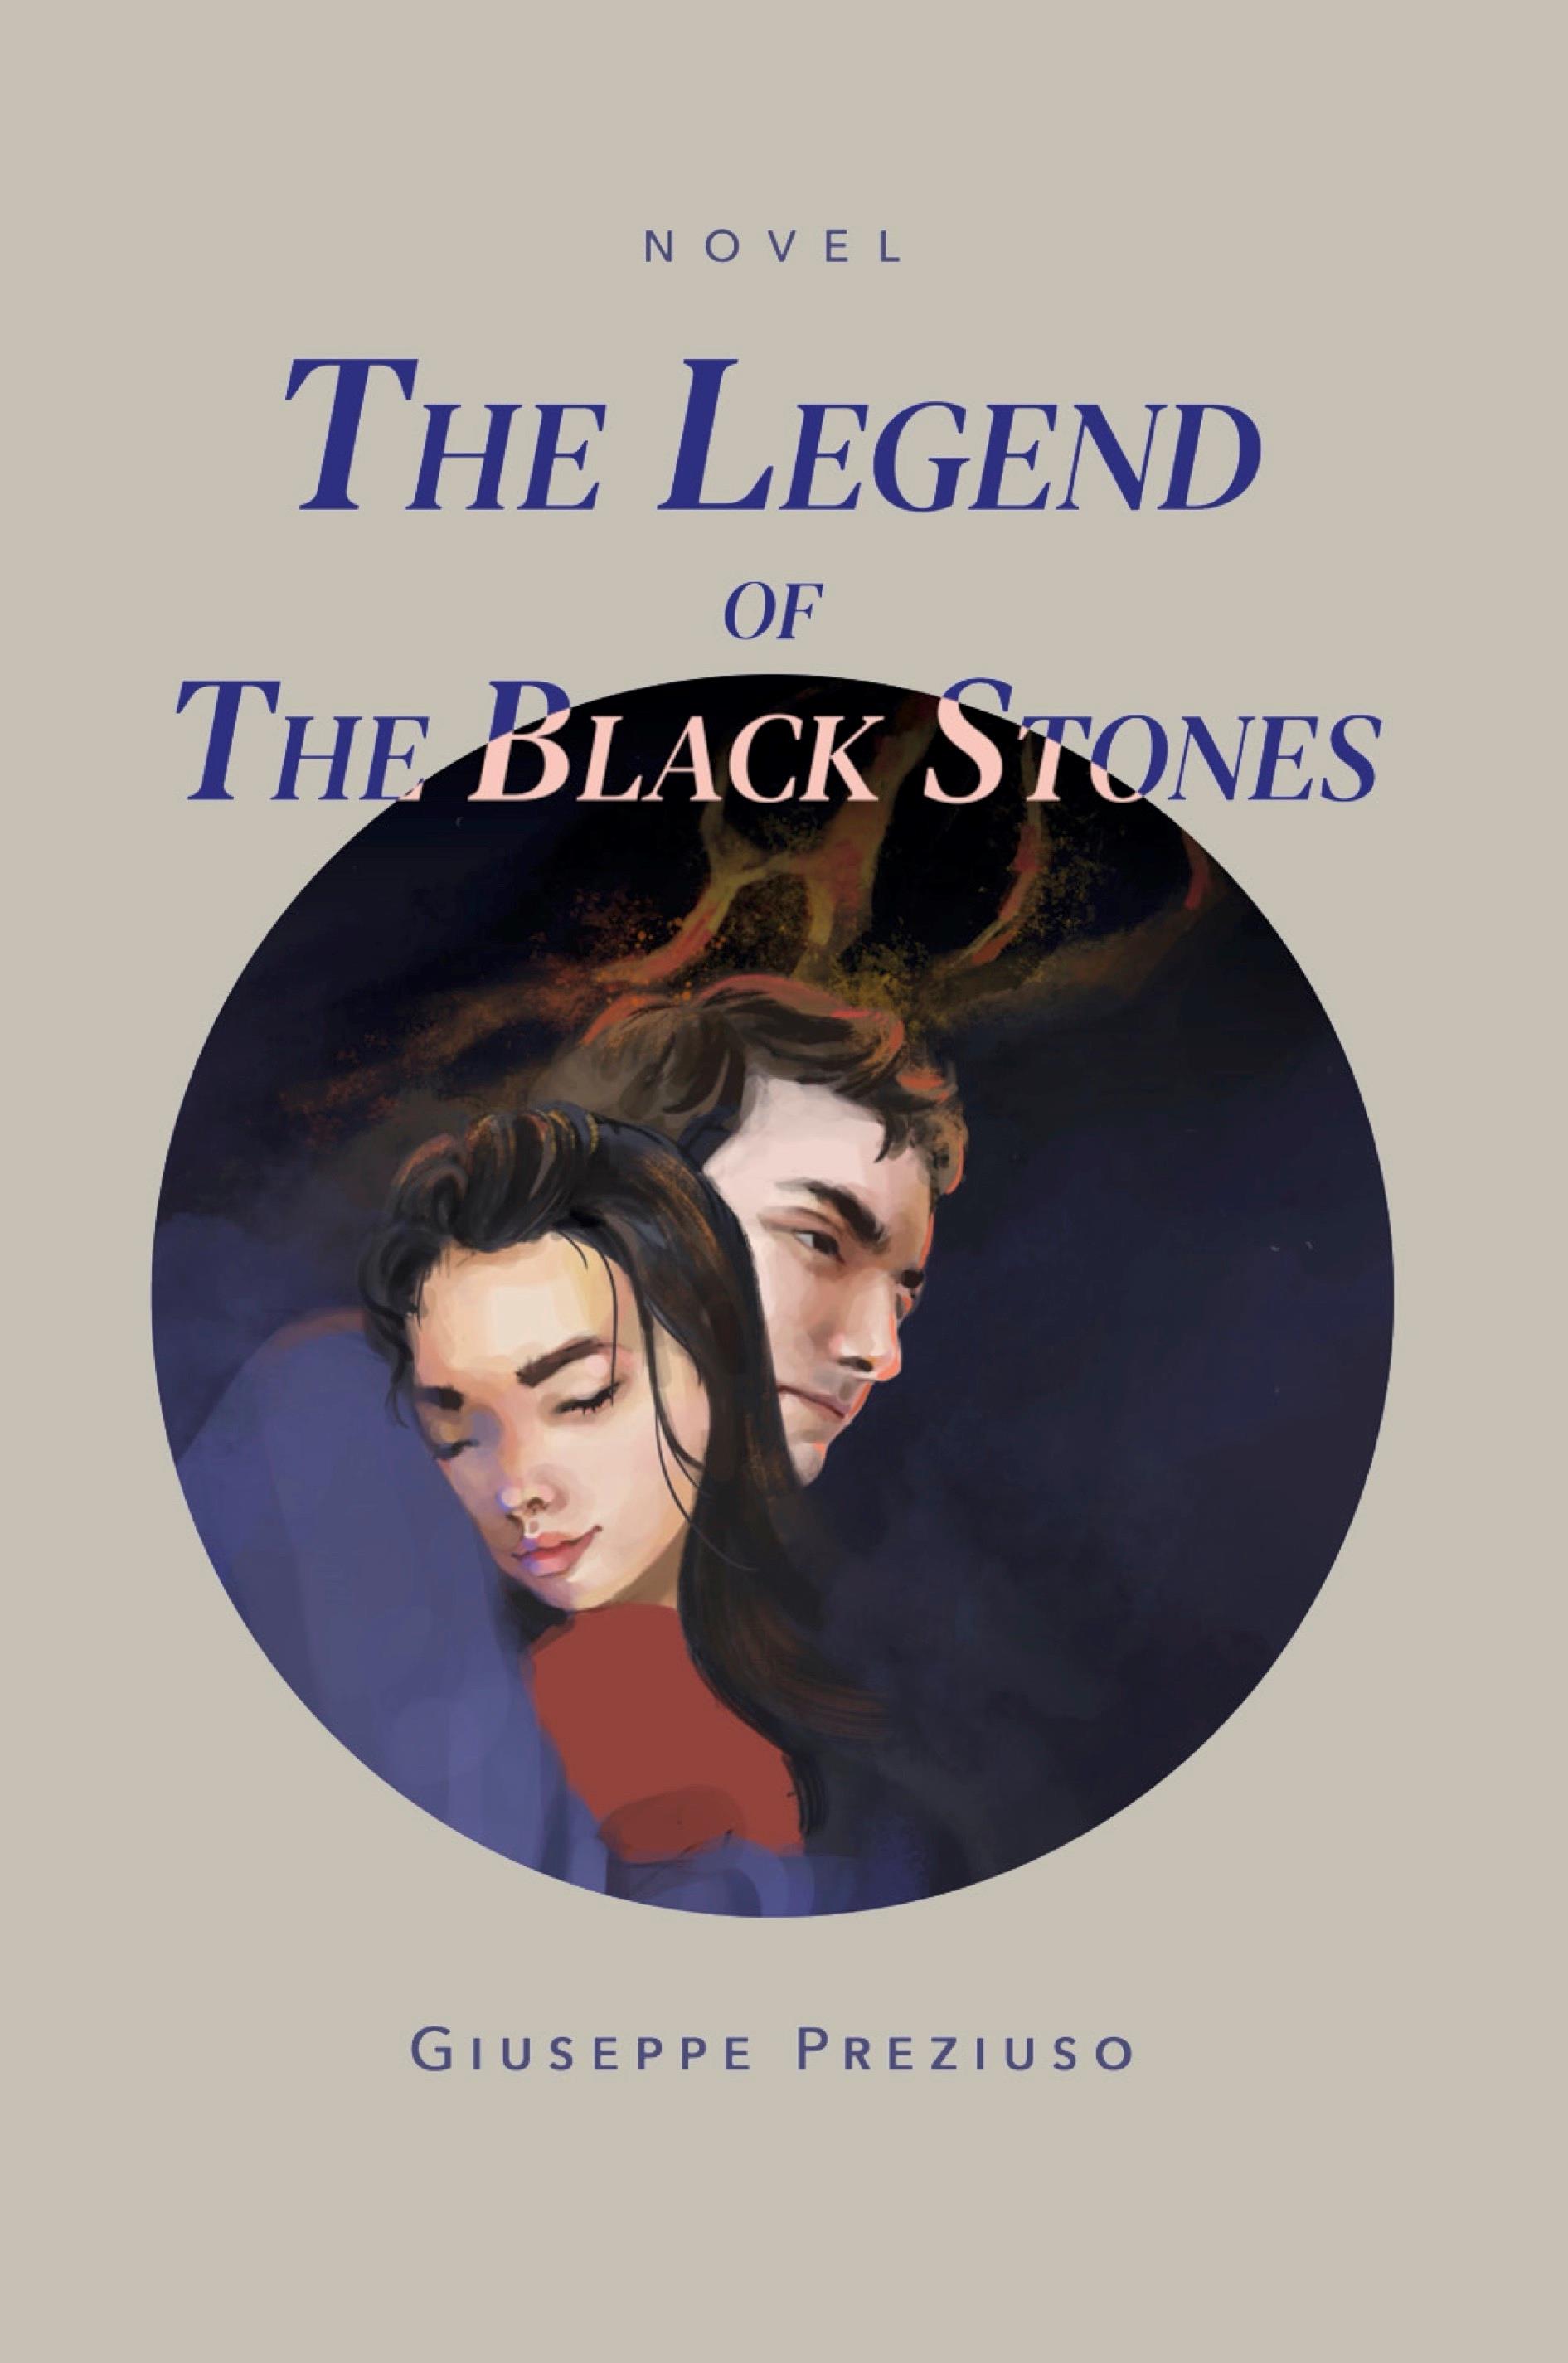 The legend of black stones